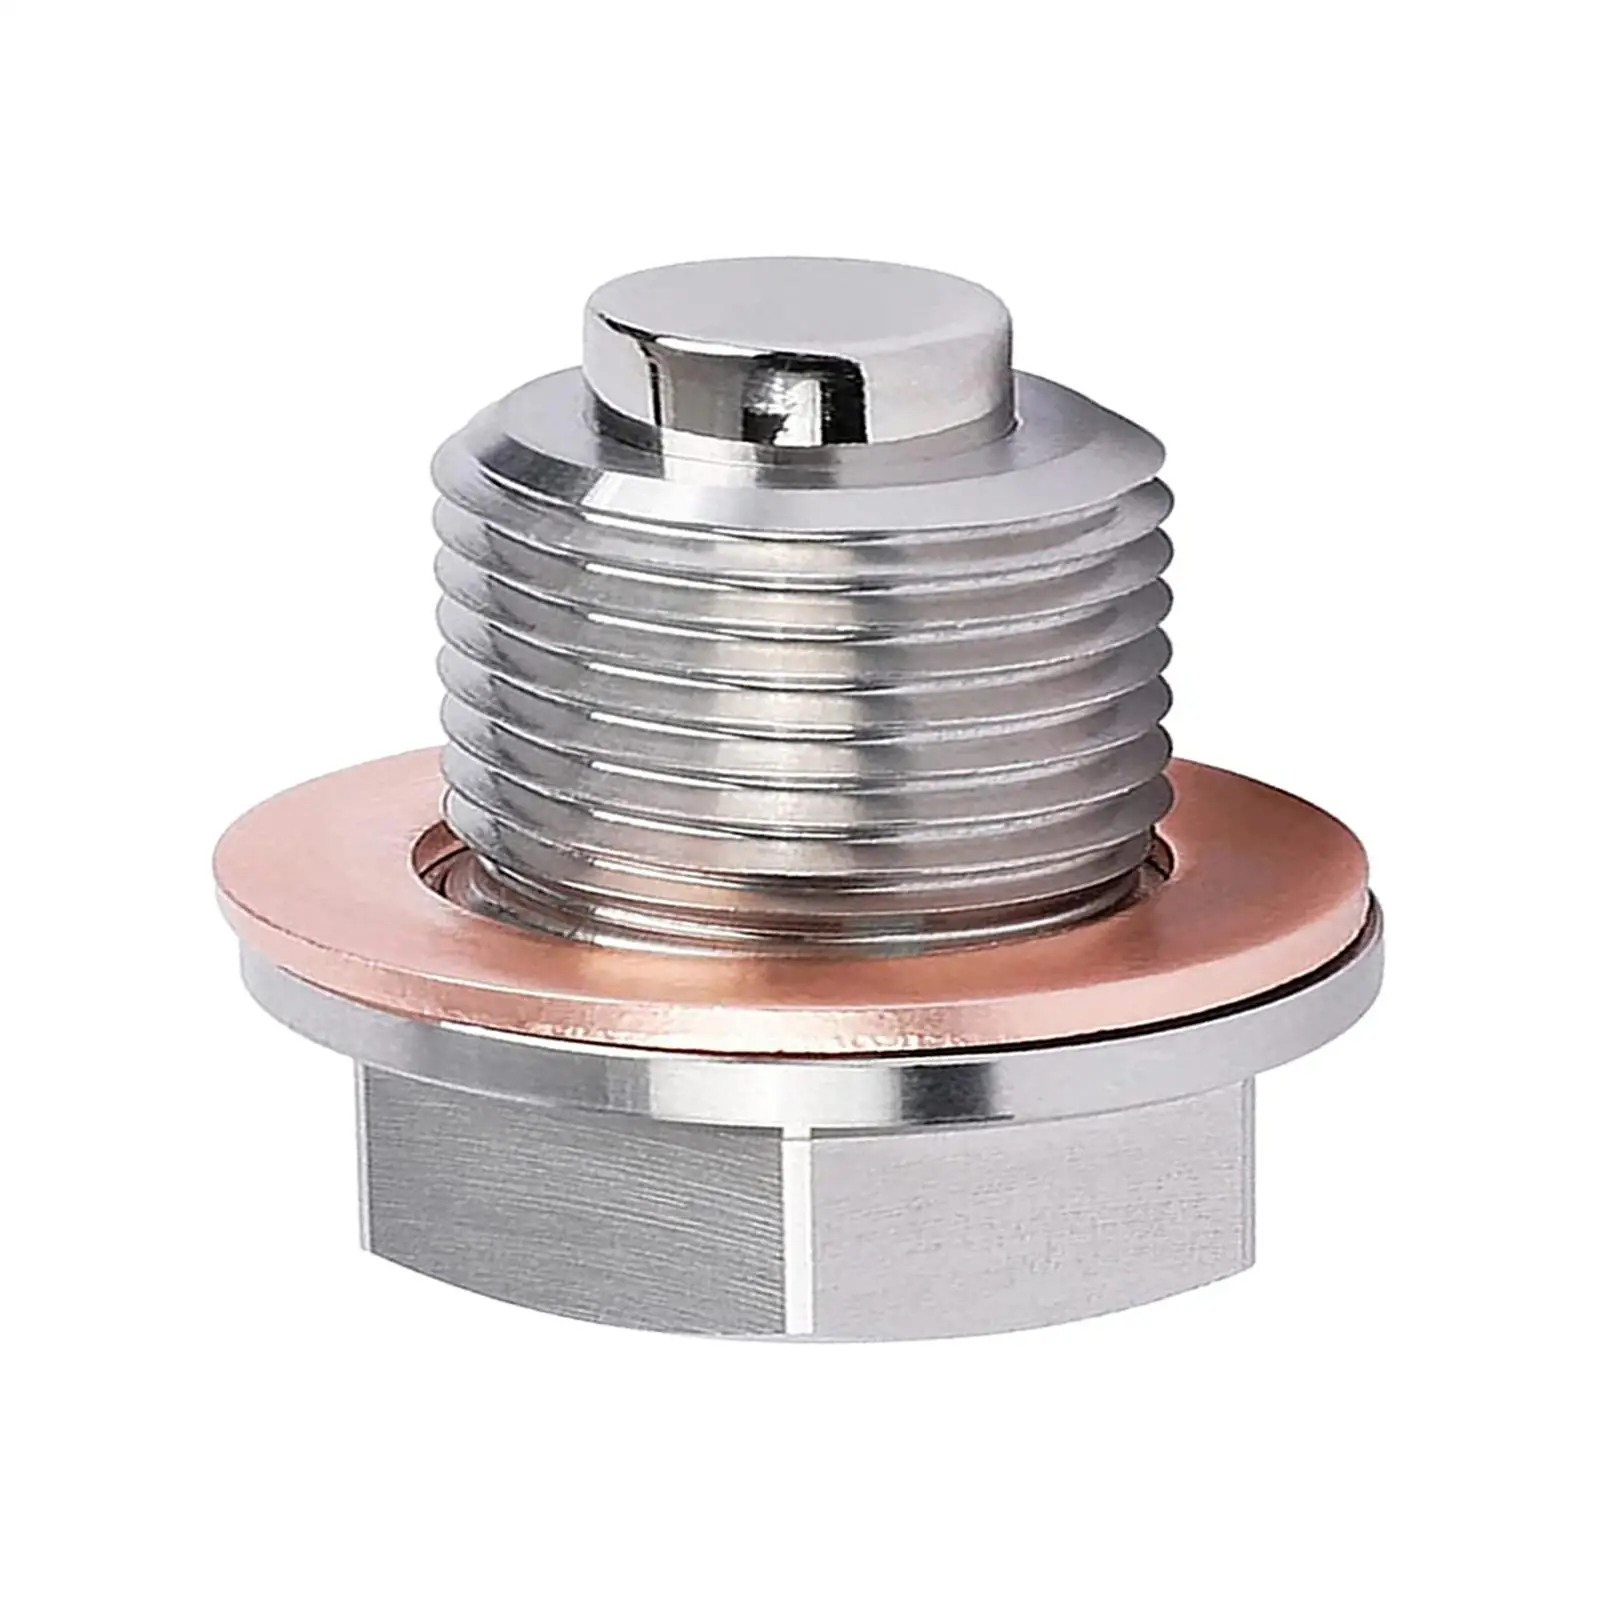 Oil Drain Plug M20x1.5 Replace Reusable Easy to Install Anti Vibration Oil Pan